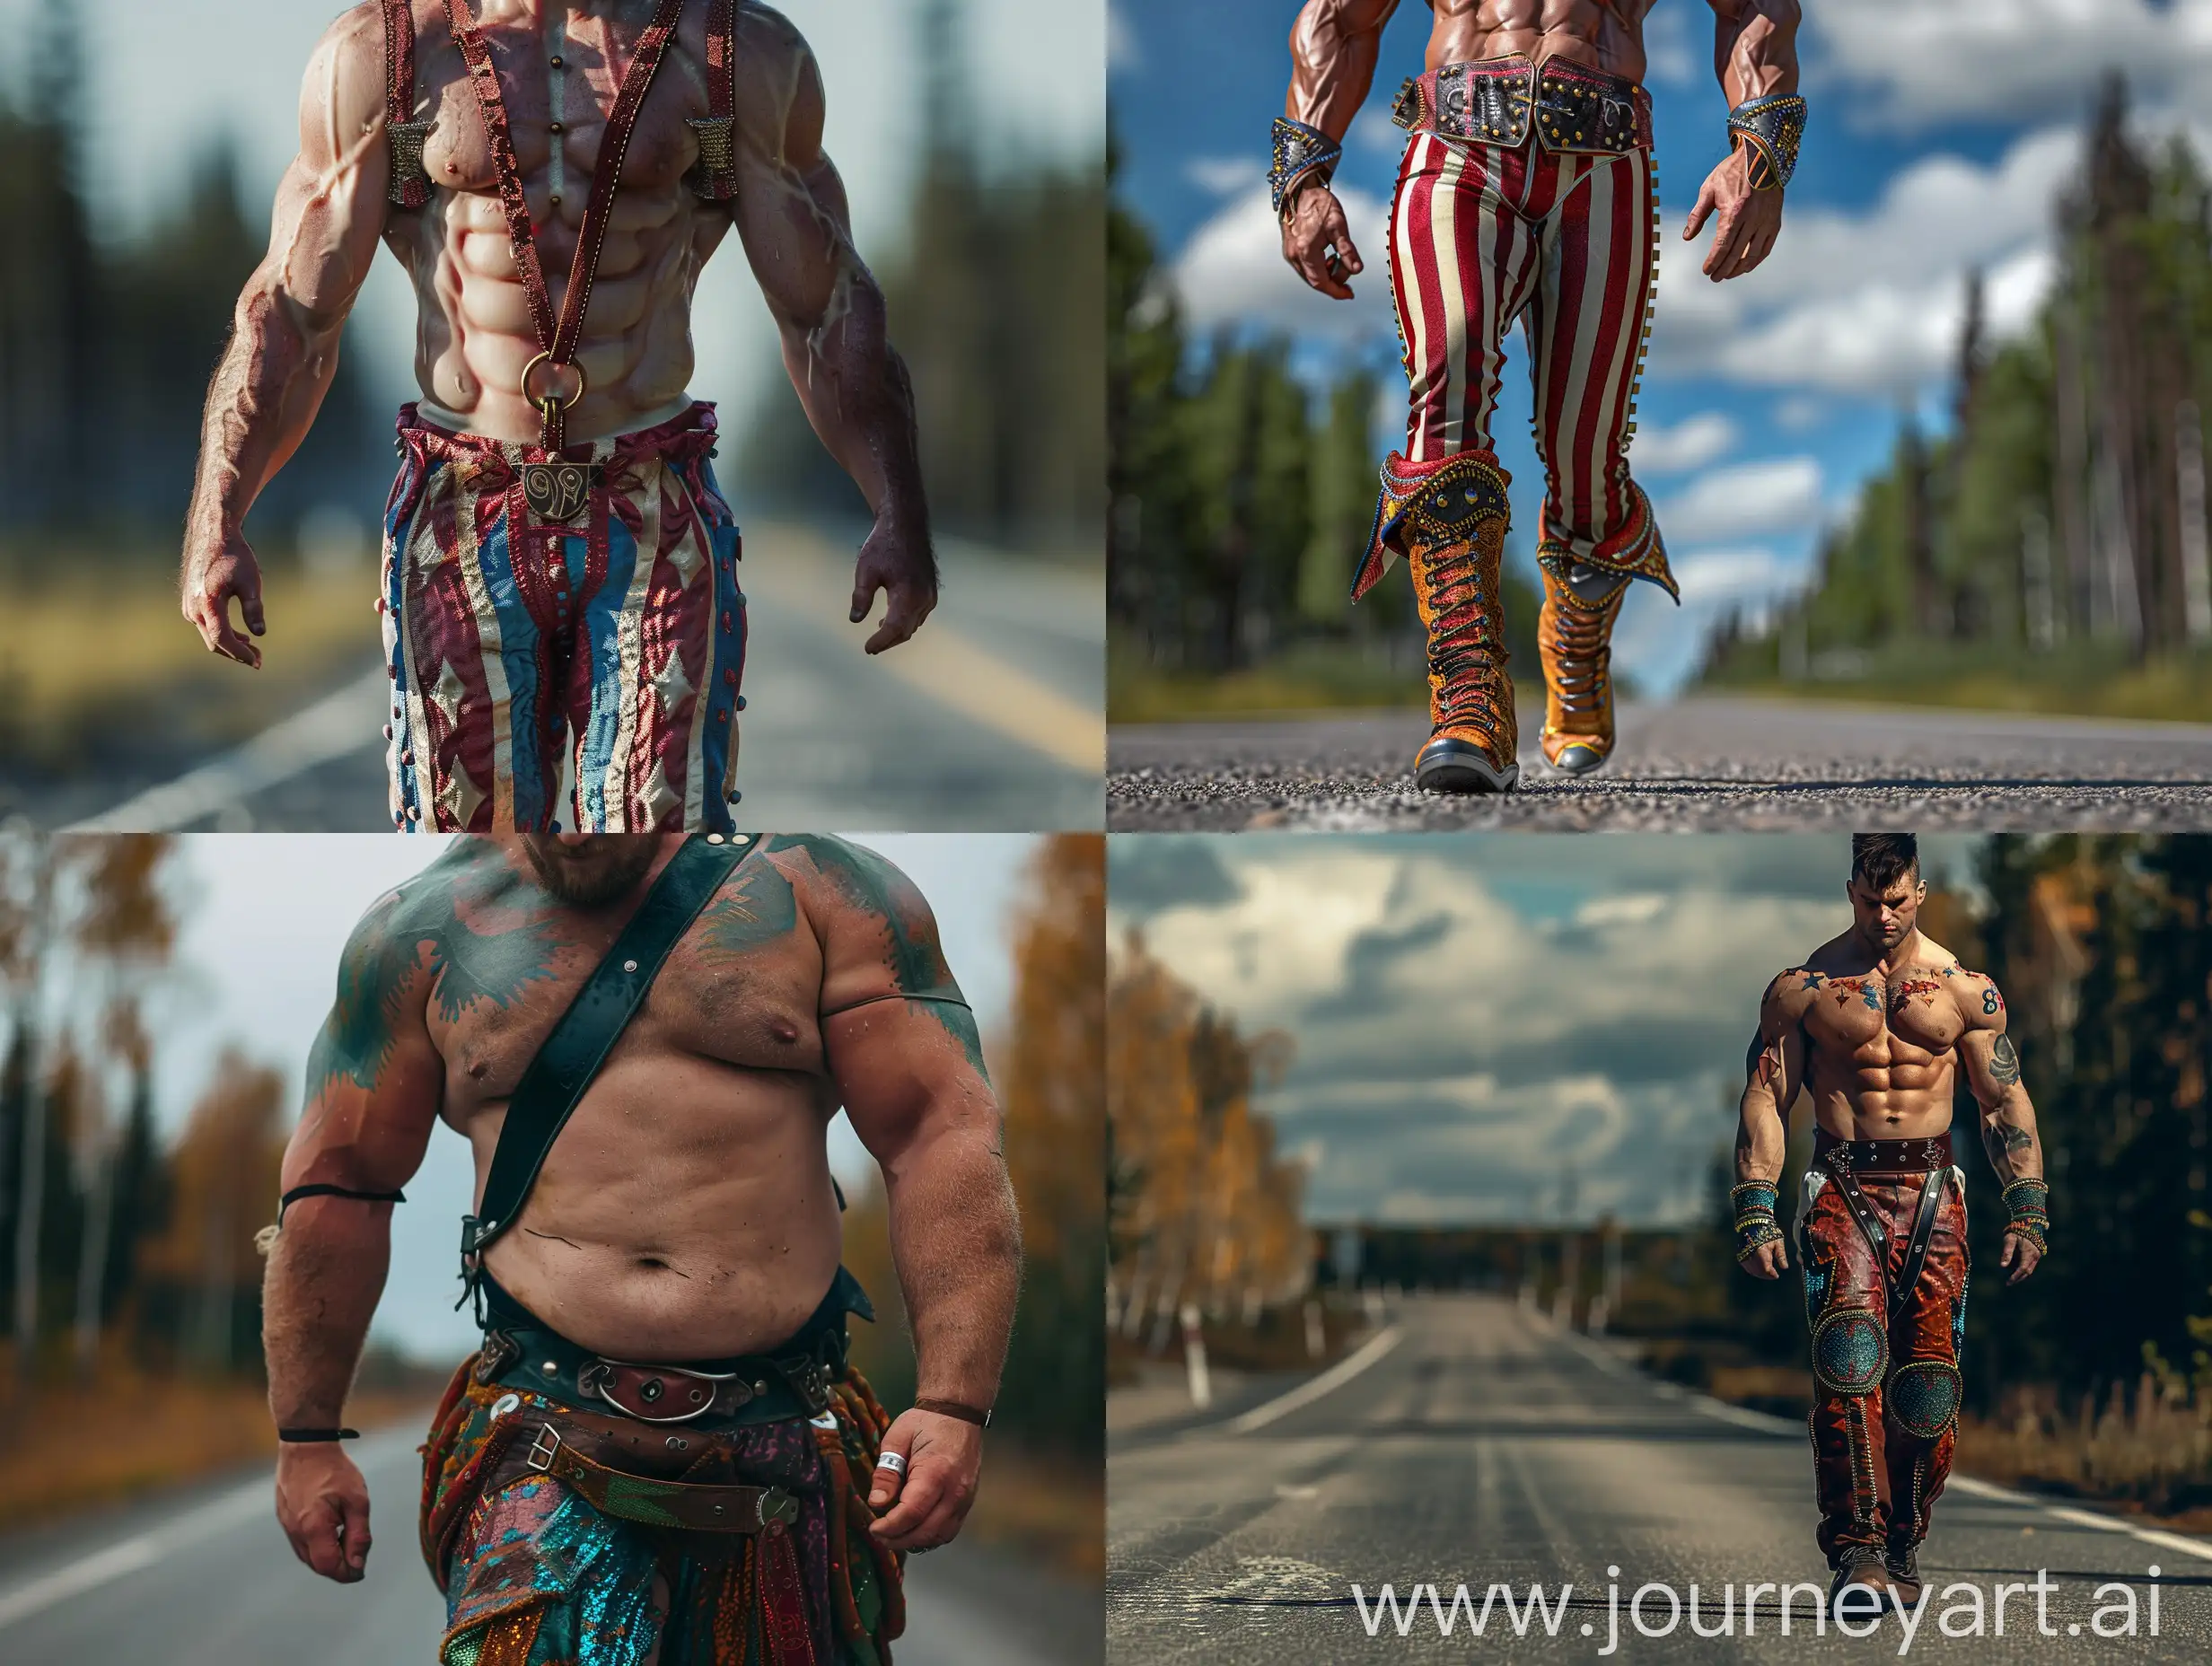 Striking-Circus-Strongman-Lost-in-Russian-Taiga-Wilderness